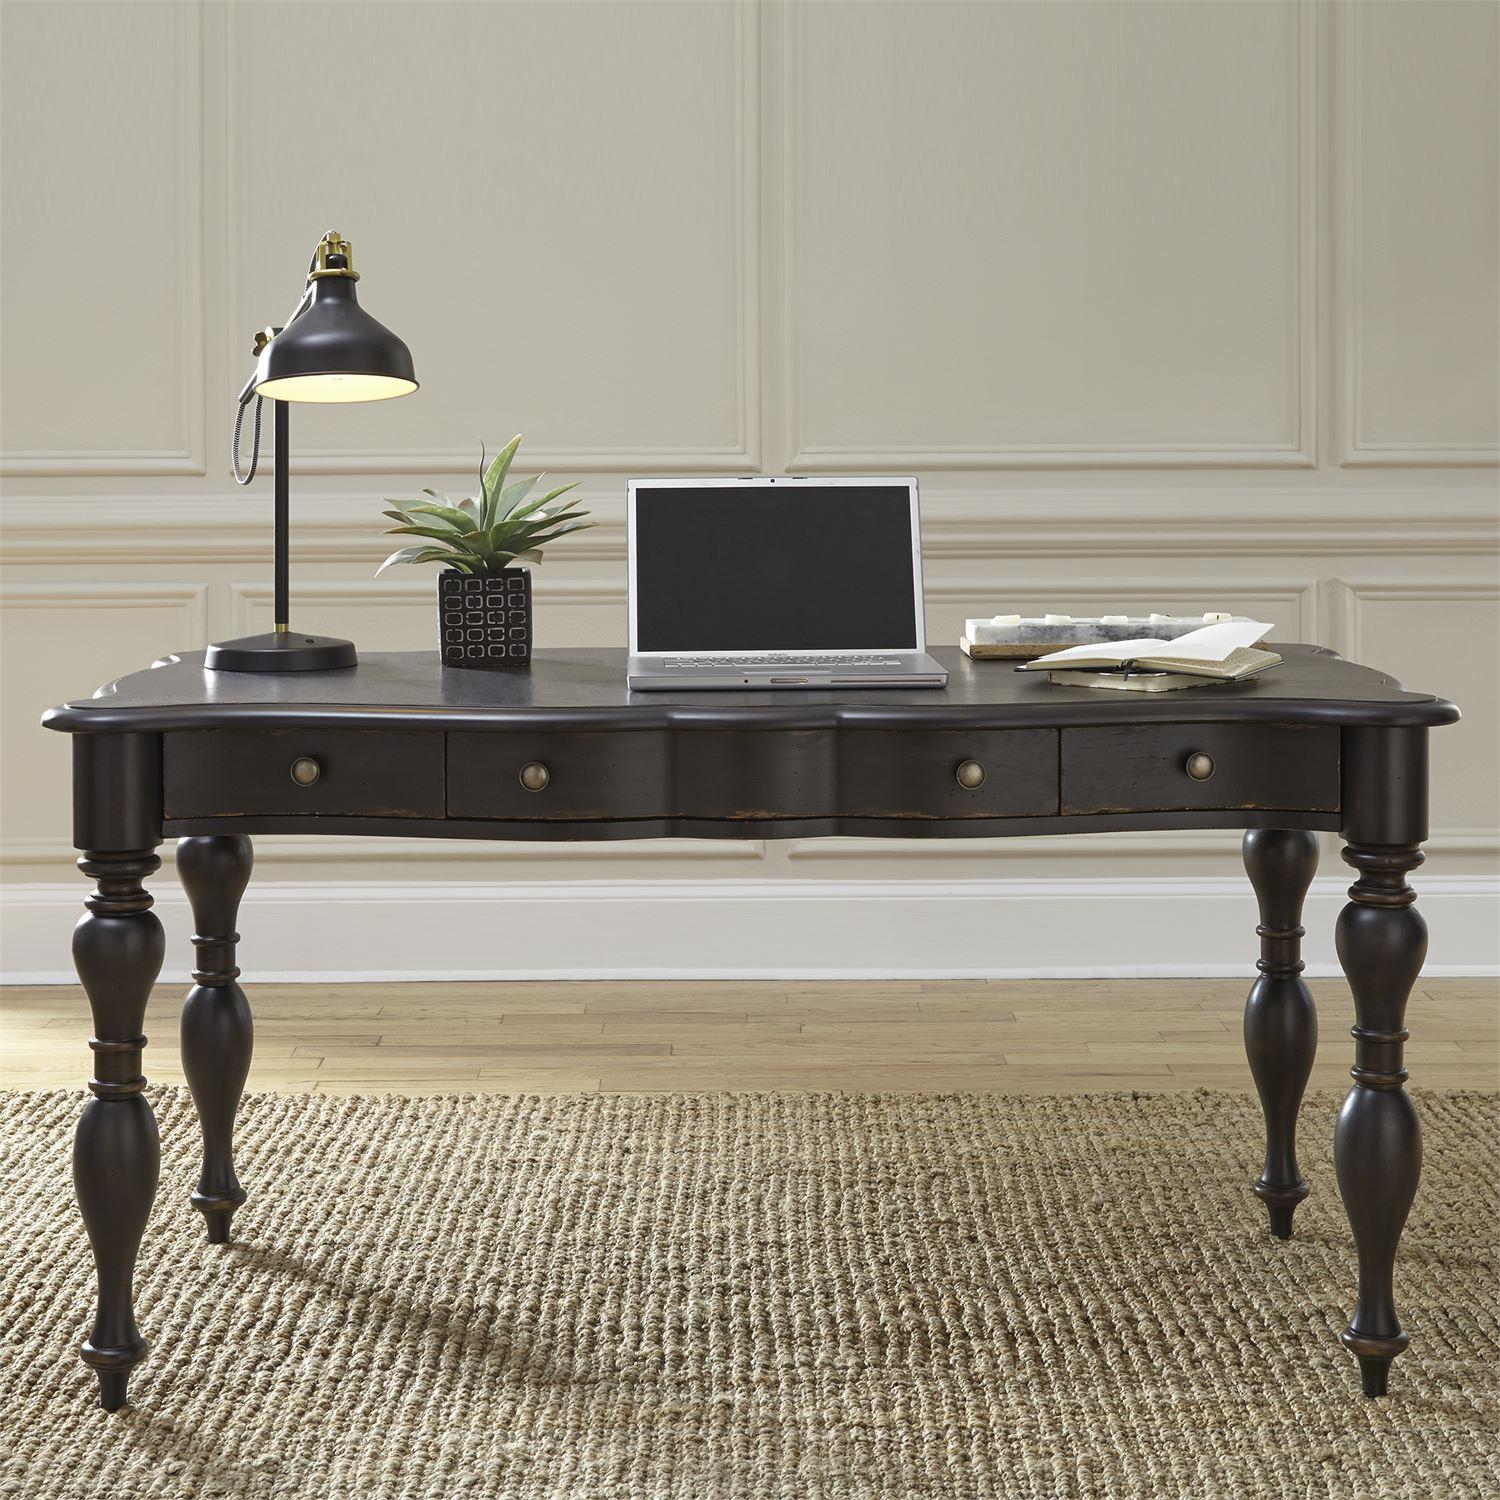 

    
Antique Black Finish Executive Desk Set 3 Pcs Chesapeake (493-HO) Liberty Furniture
